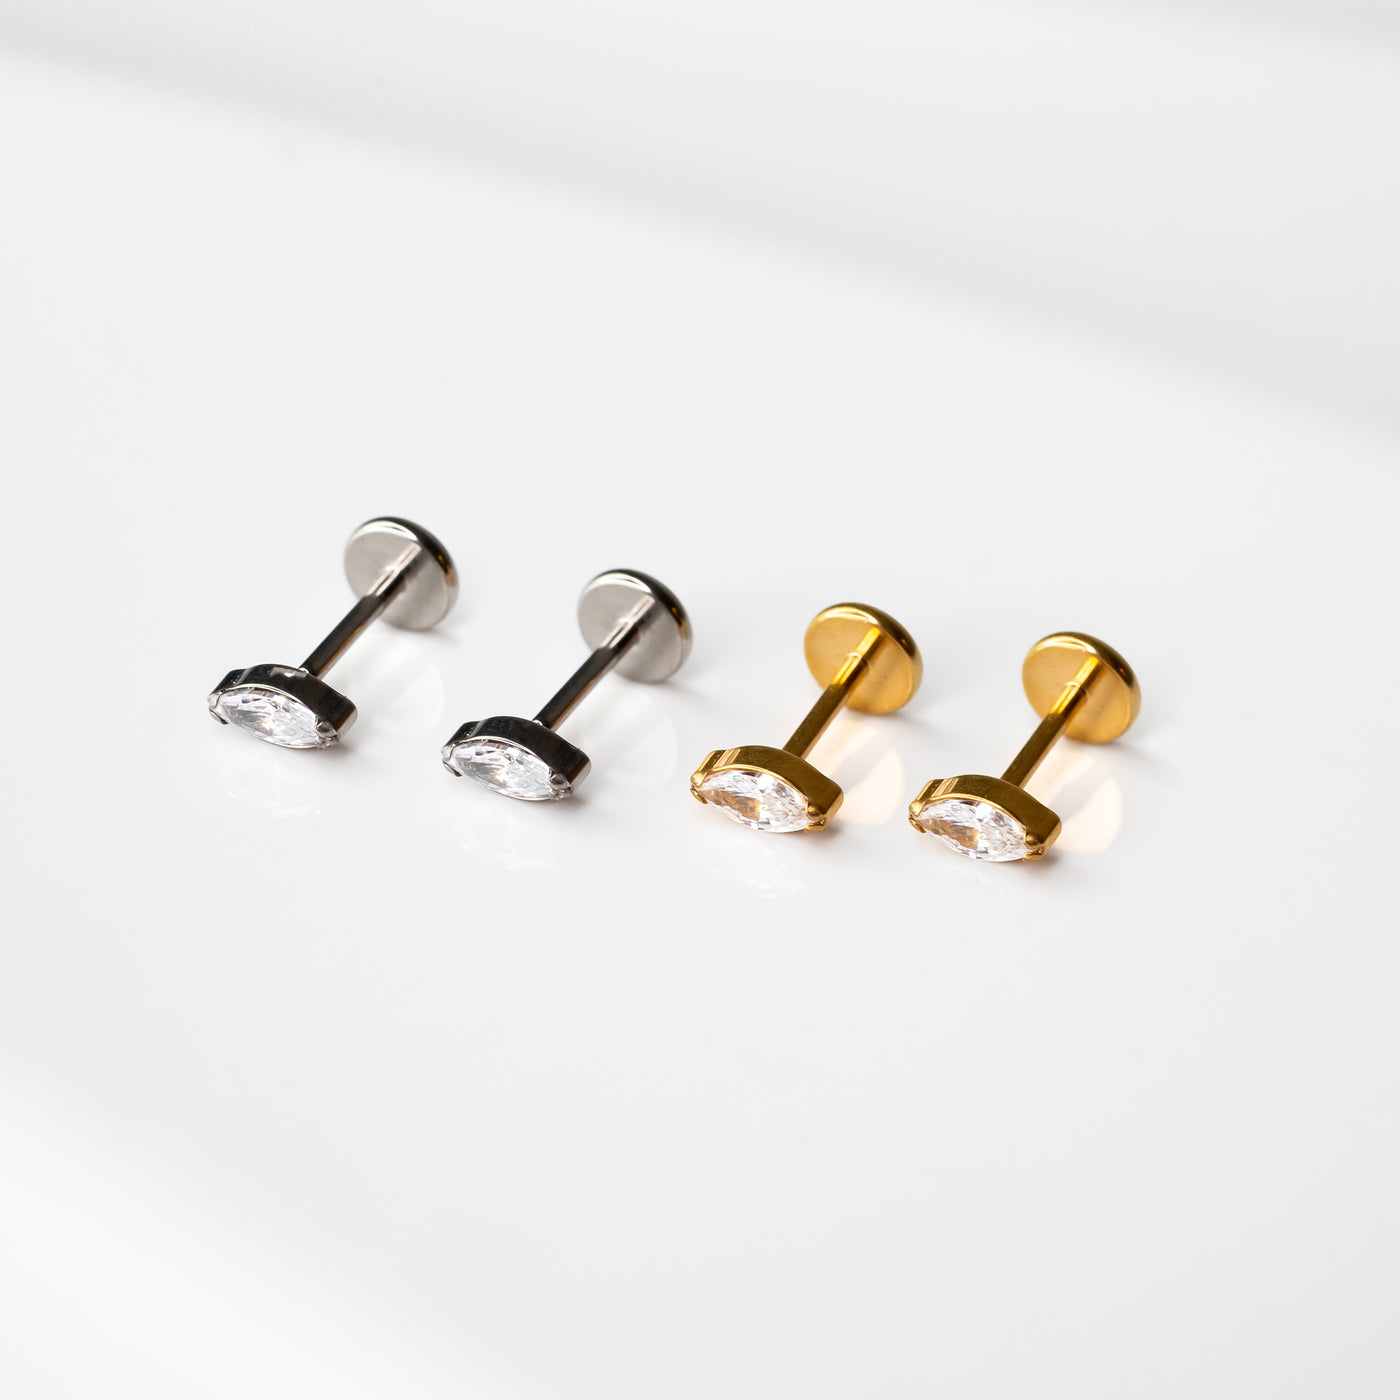 Heart Flat Back Sleeper Earrings - Grayling - Titanium - Hypoallergenic - 1/4 inch Length - 20ga - Waterproof Gold PVD Finish